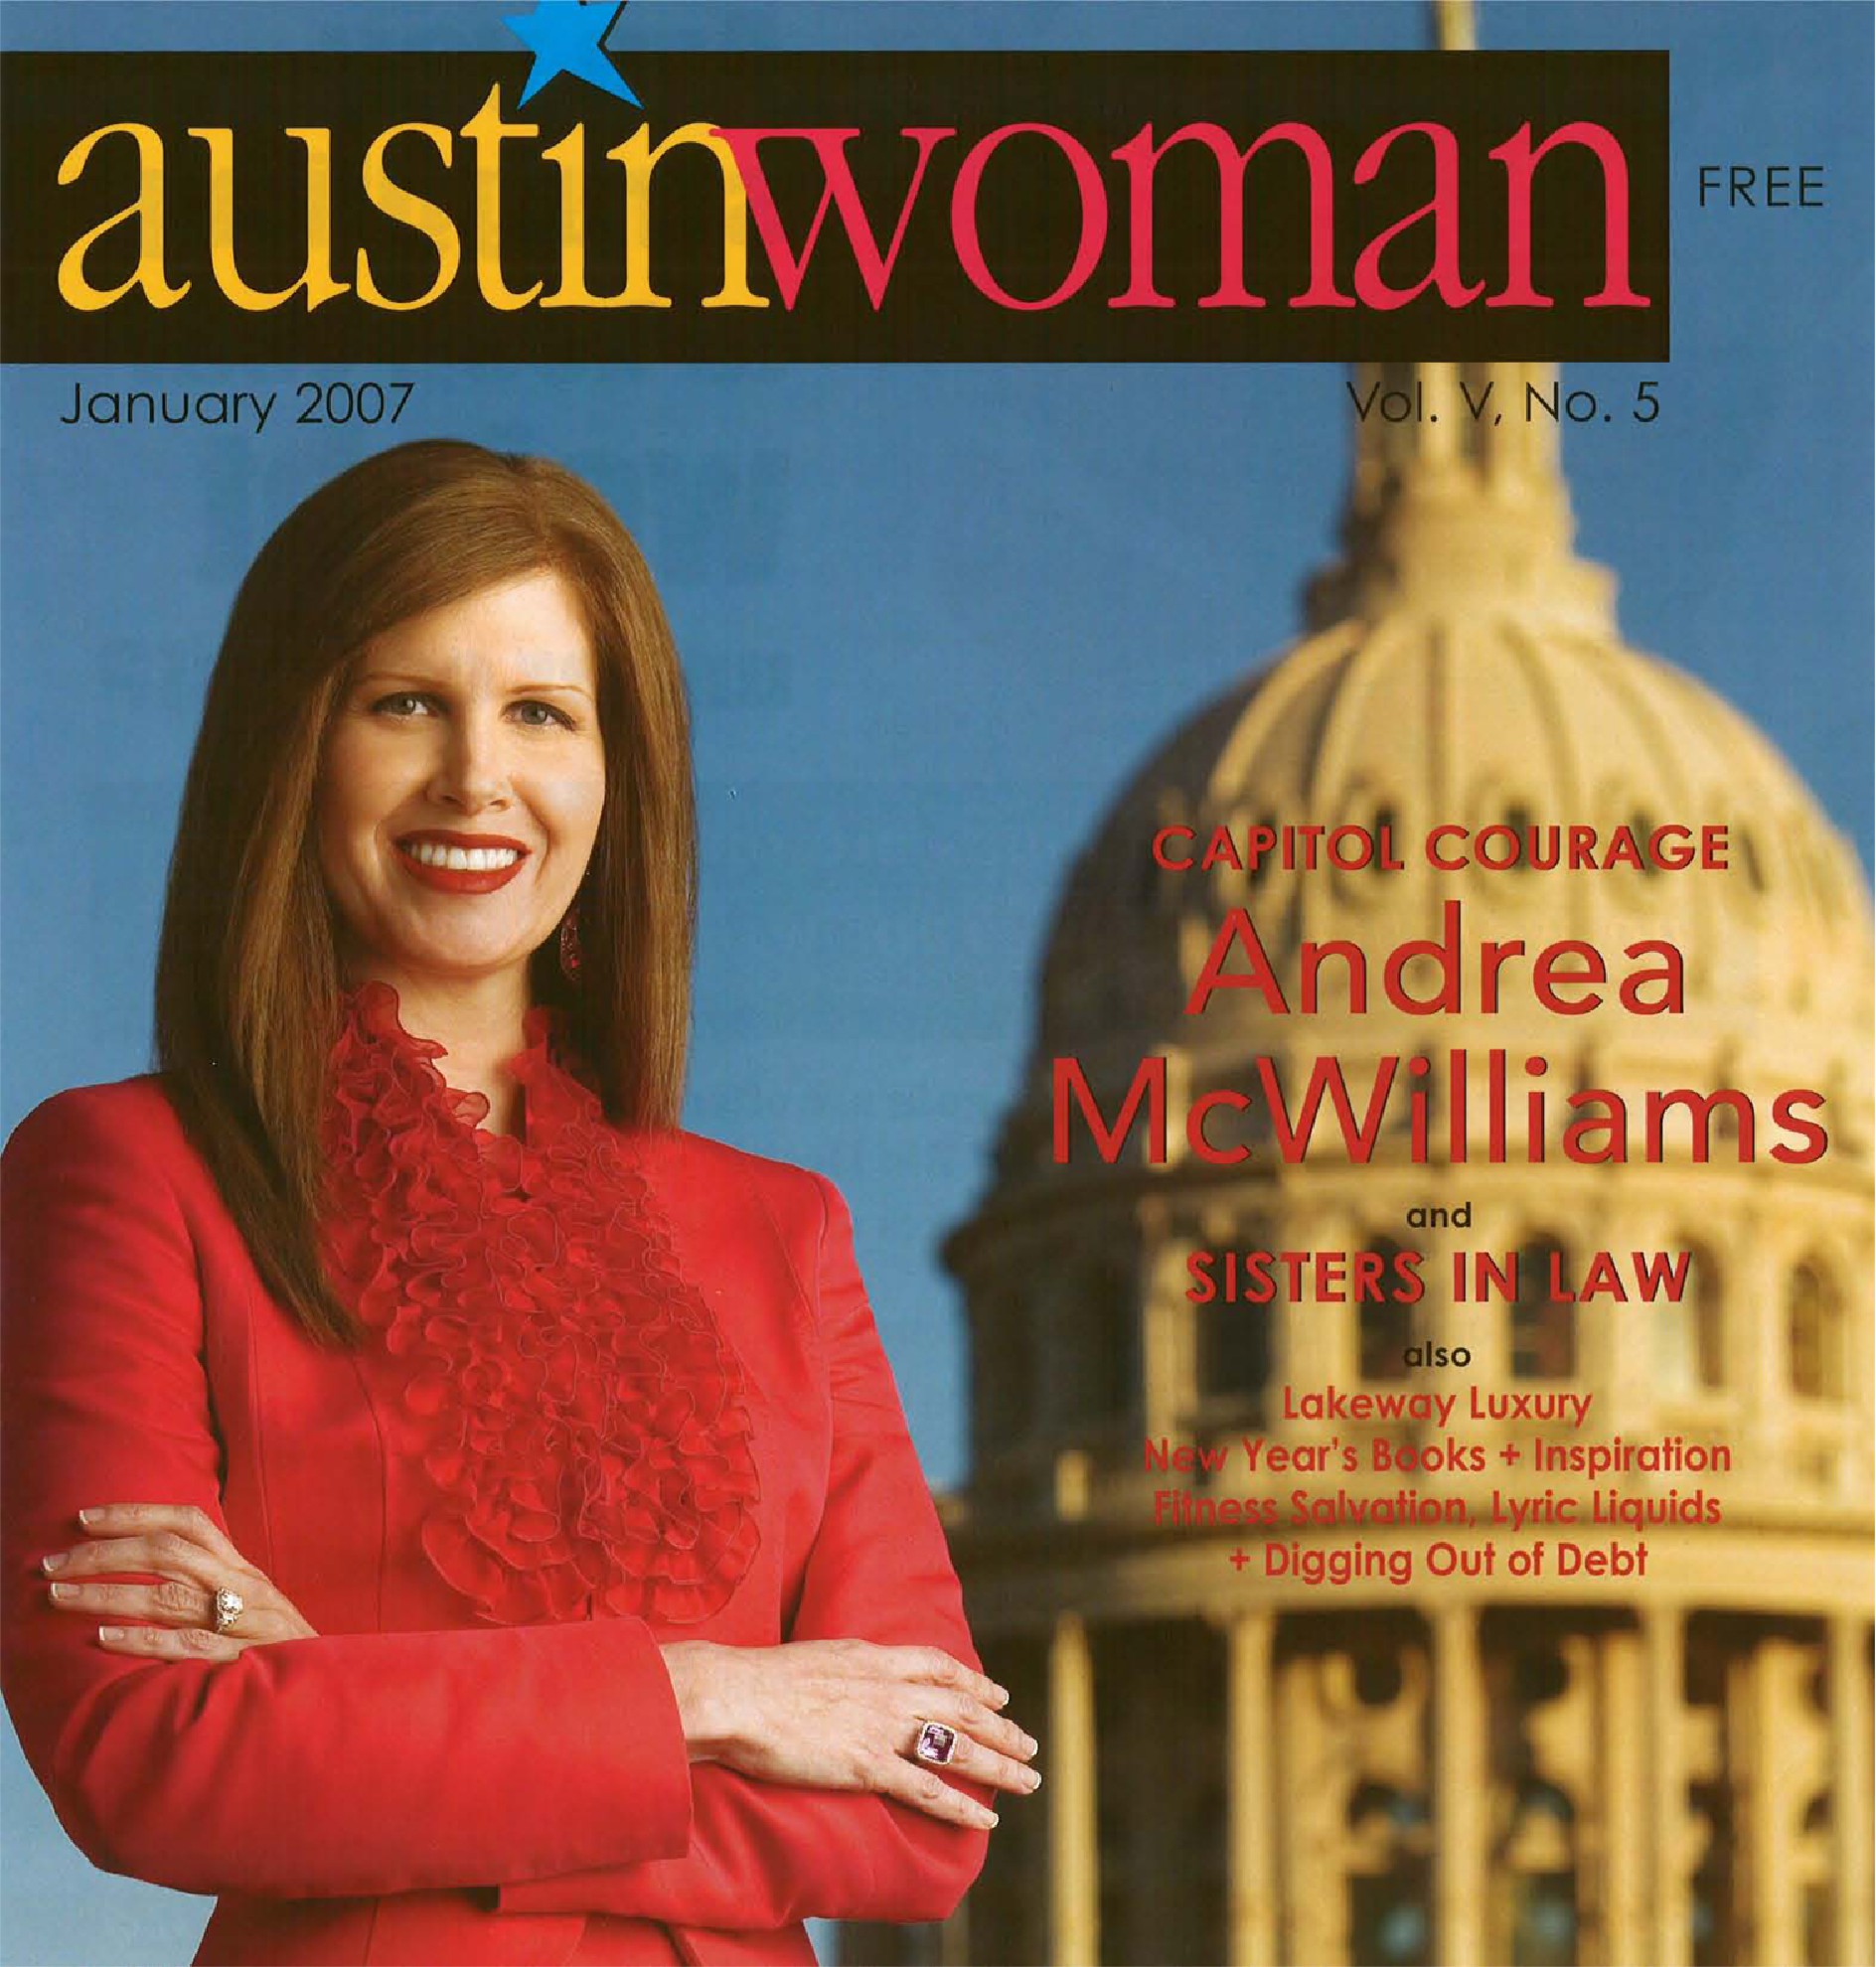 Capitol Courage- Austin Woman